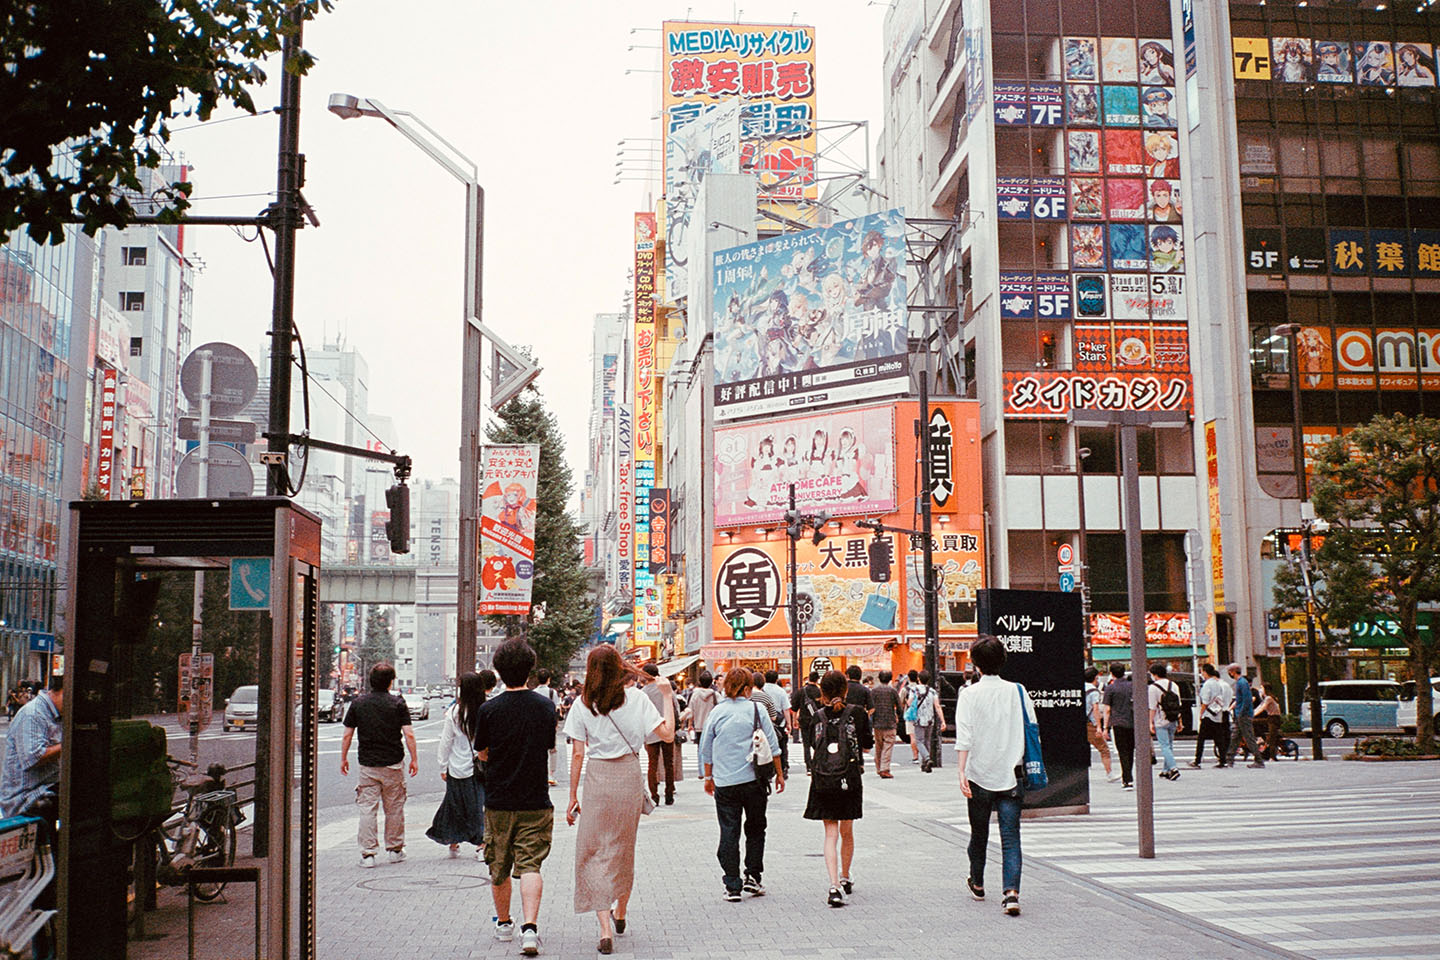 People walking on a street in Shibuya